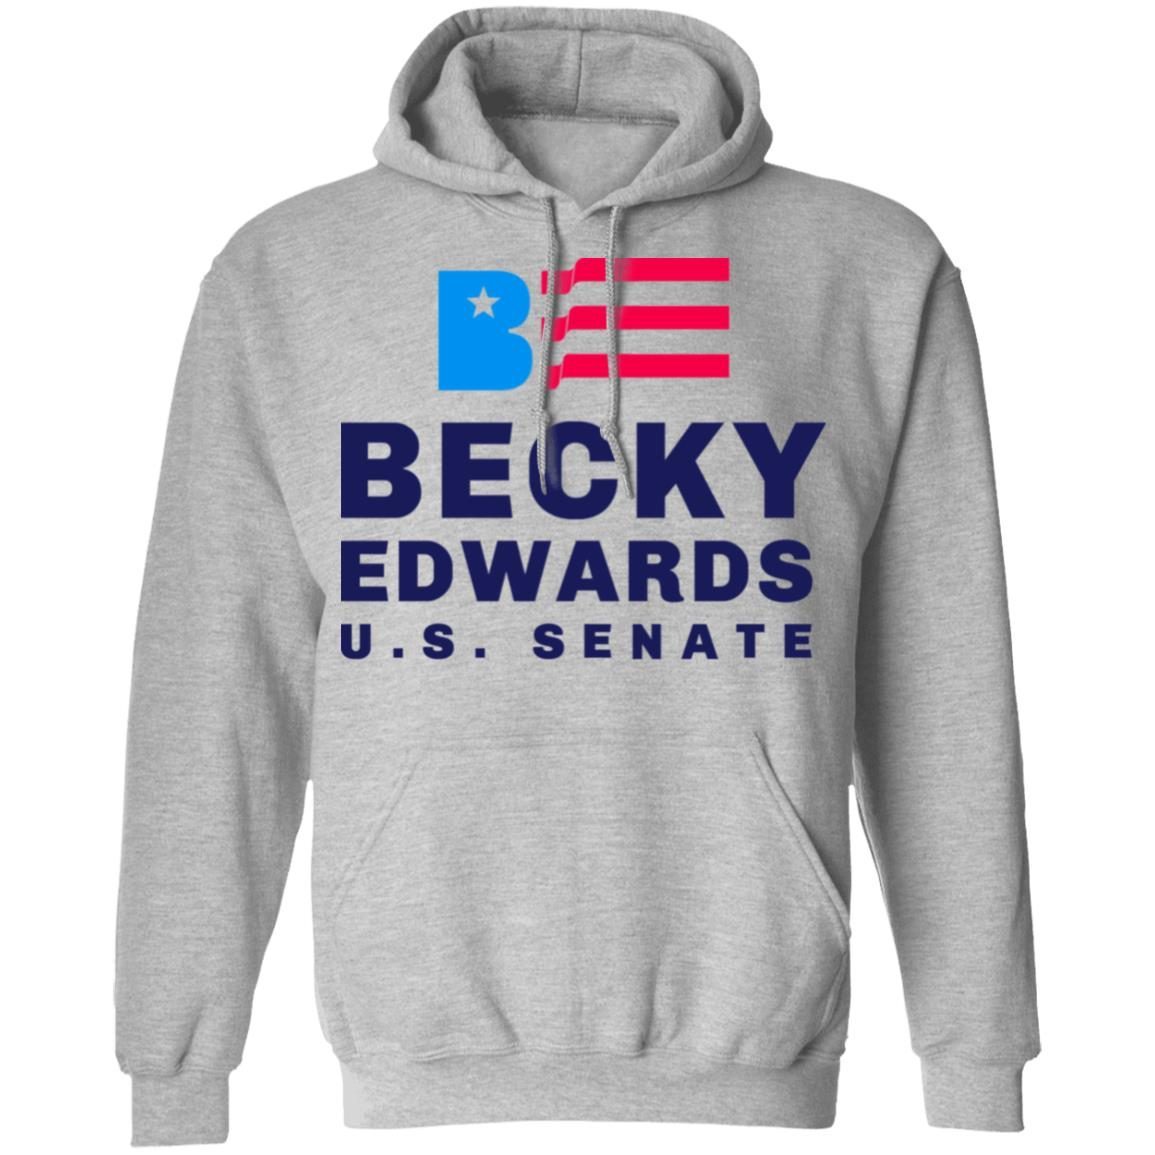 Becky Edwards Us Senate 4th Of July Shirt